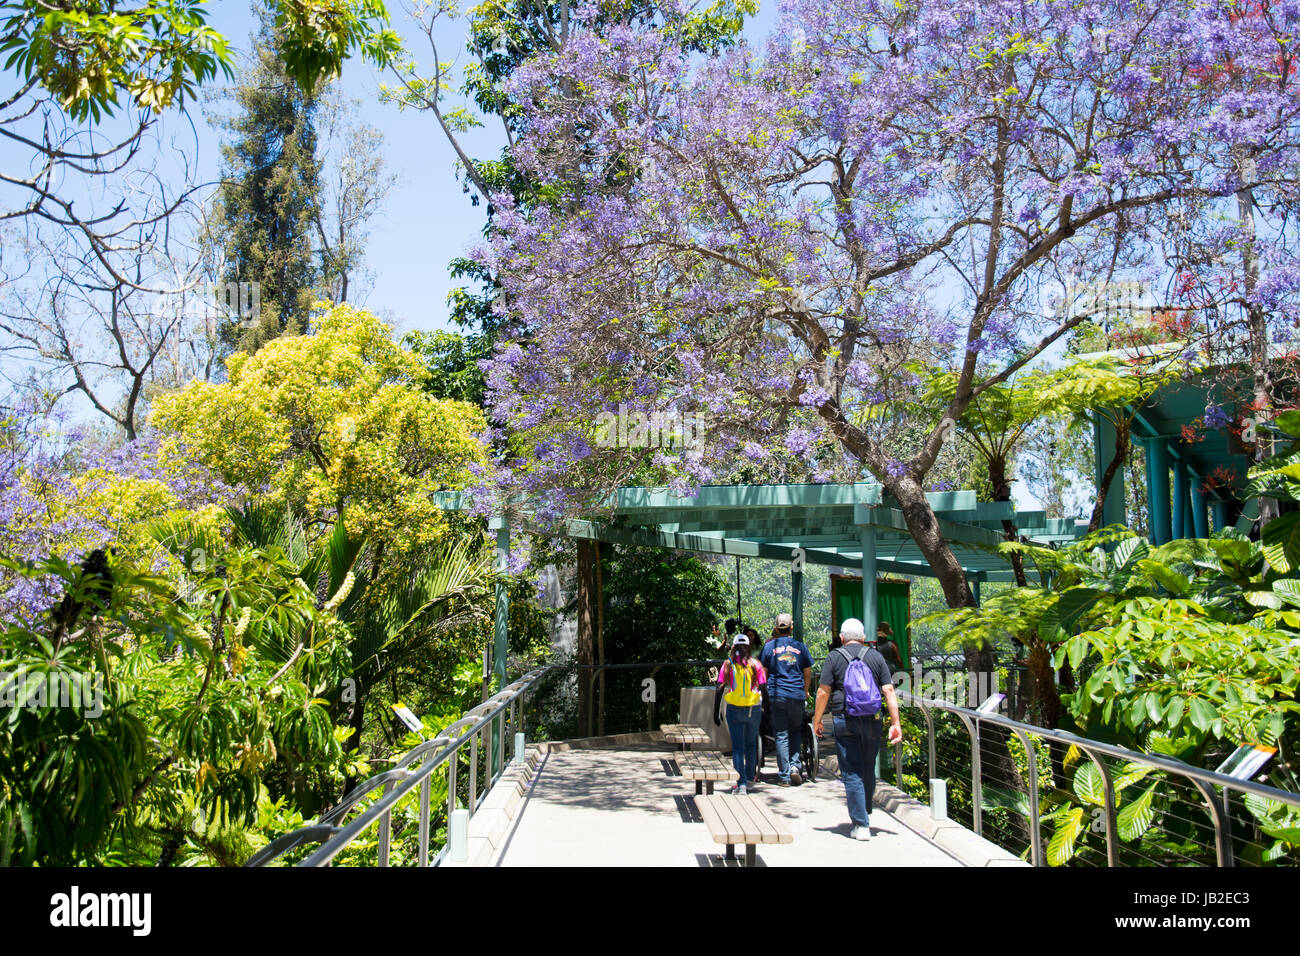 The San Diego Zoo is also famous as a botanic garden. Stock Photo